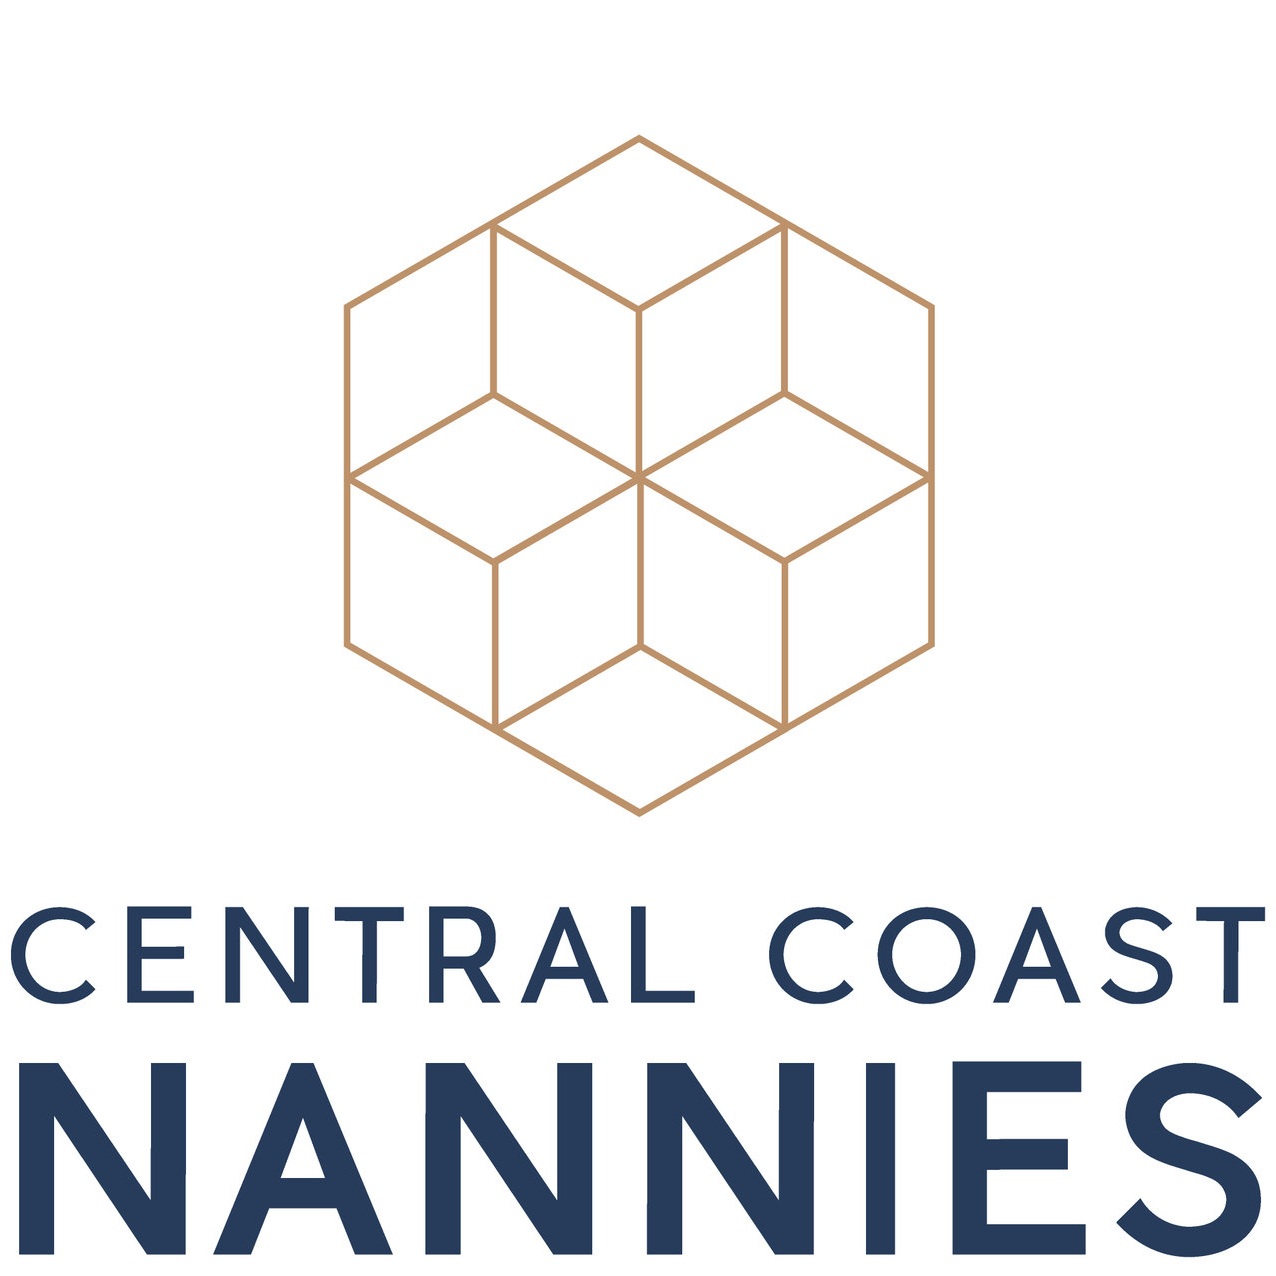 Central Coast Nannies